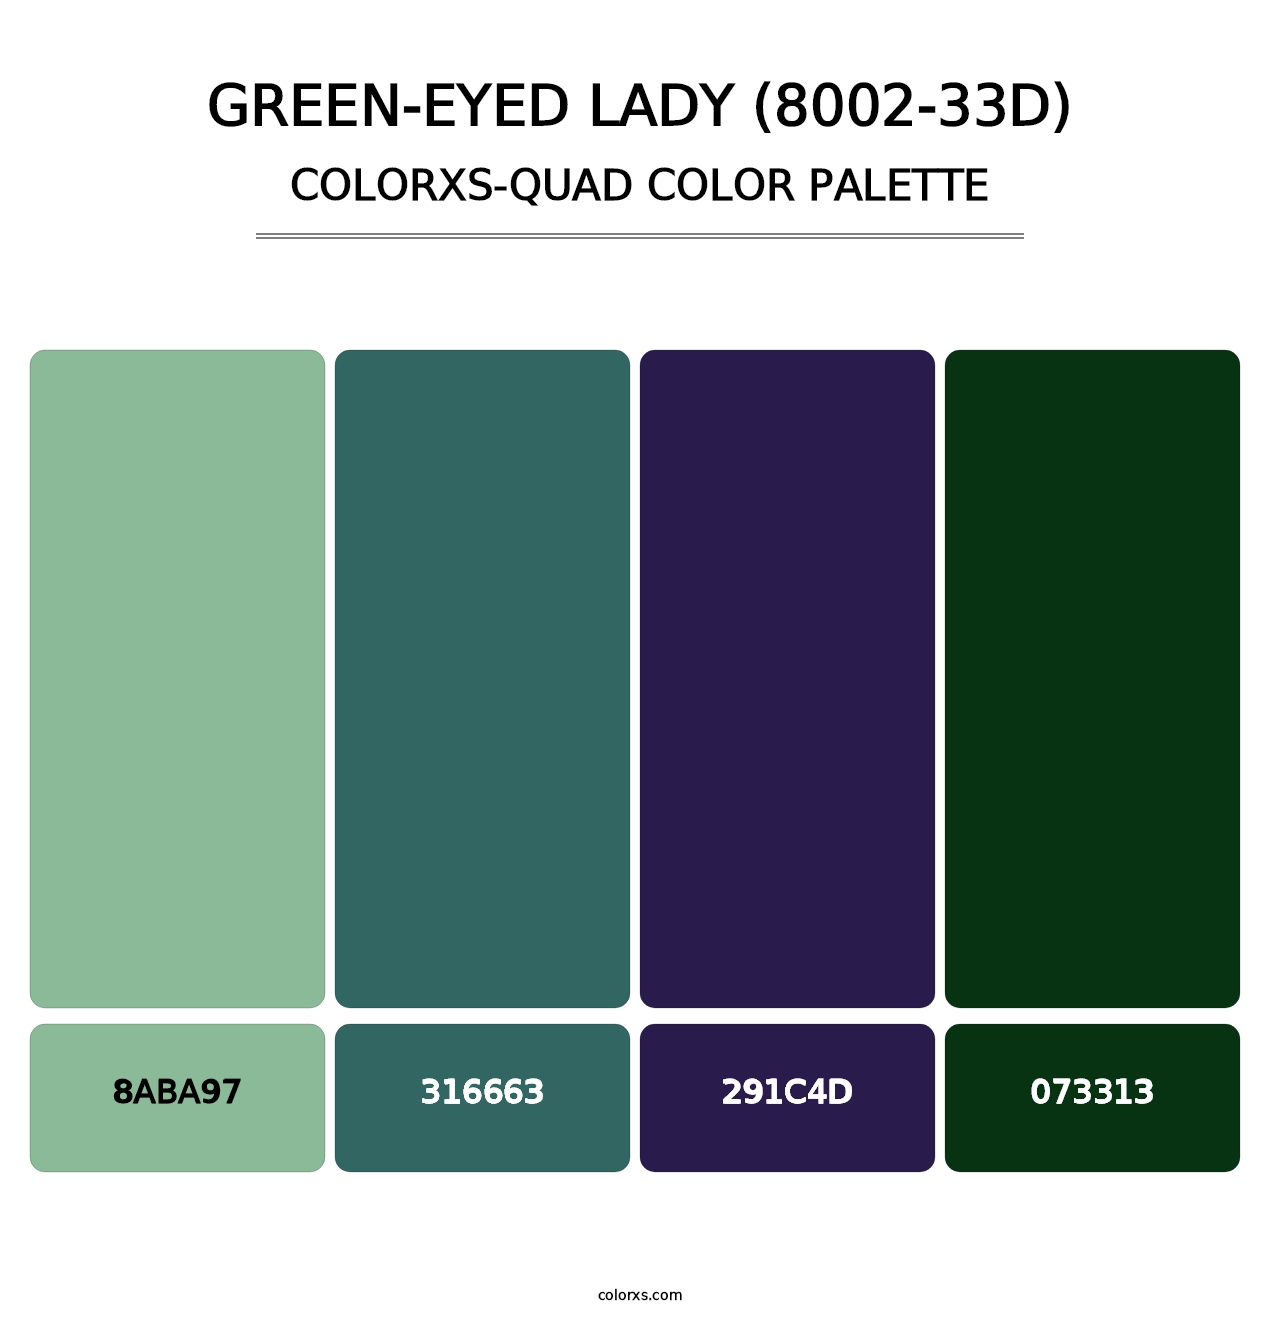 Green-Eyed Lady (8002-33D) - Colorxs Quad Palette